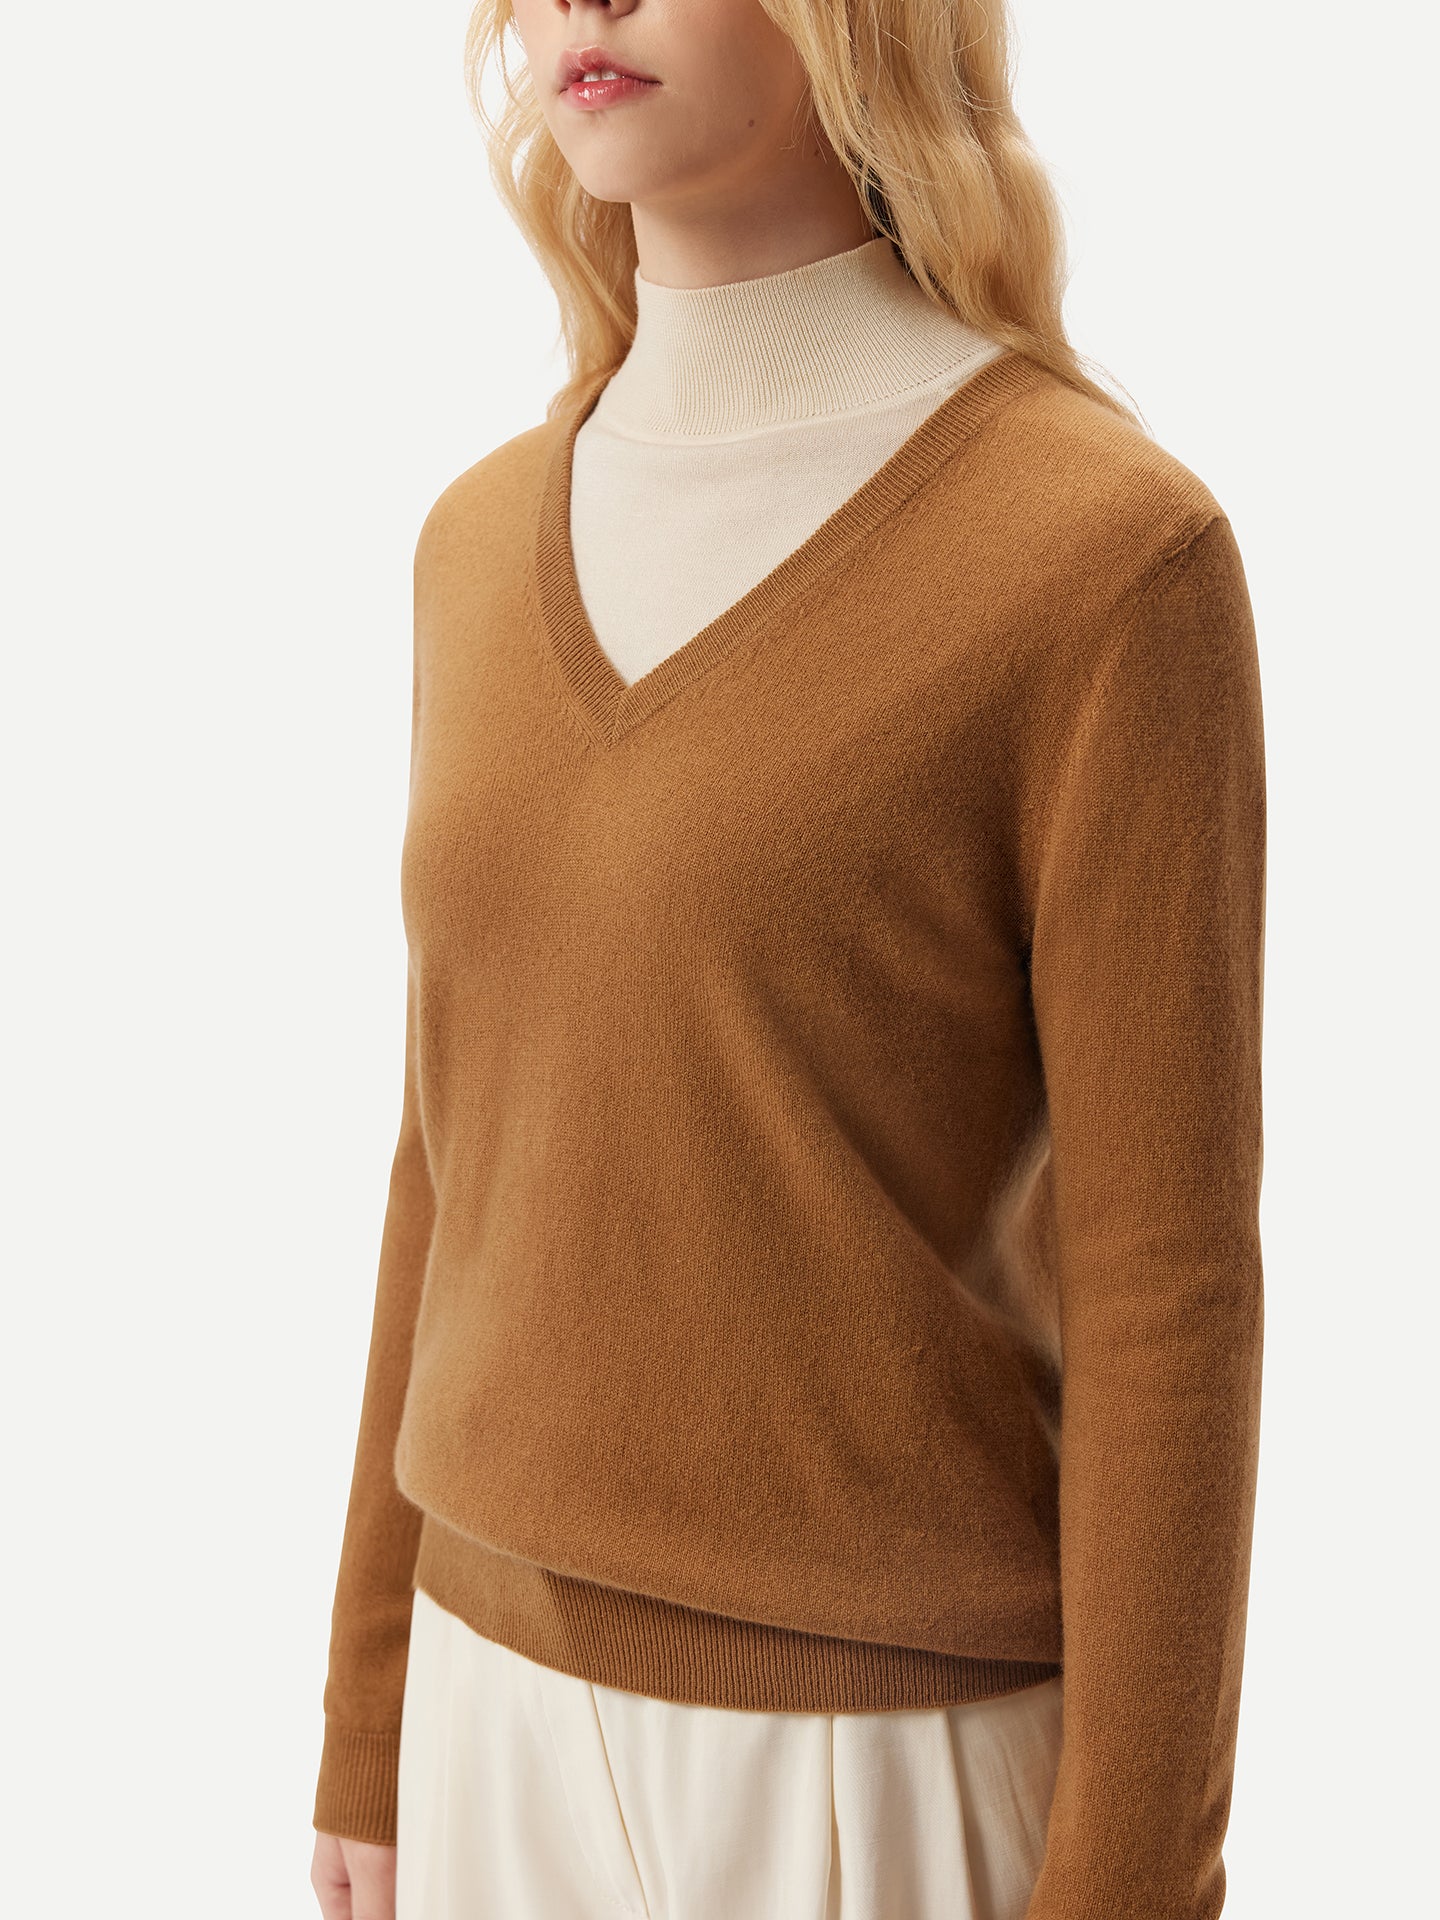 Women's Basic Cashmere V-Neck Sweater Almond - Gobi Cashmere